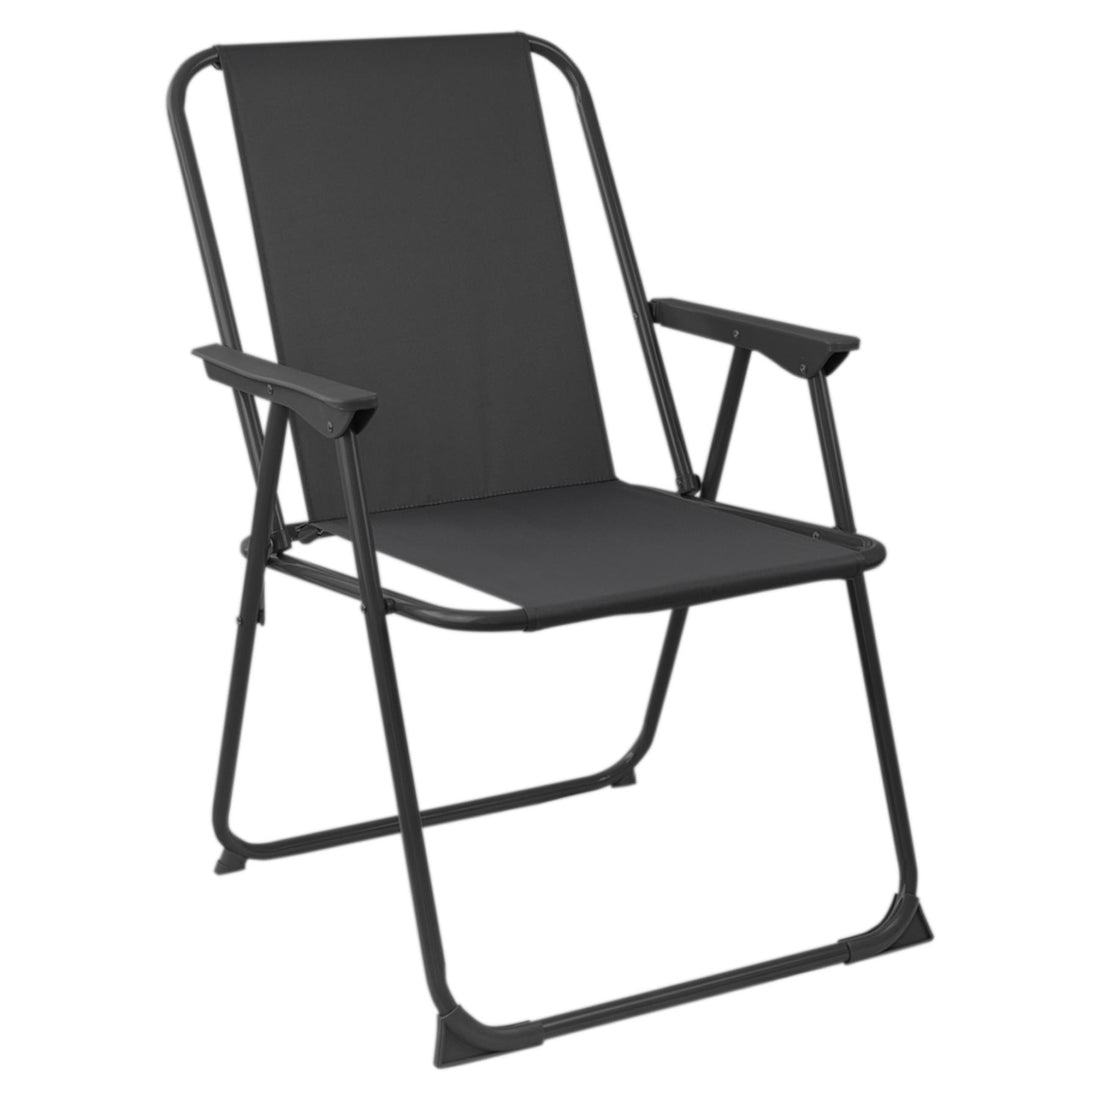 Harbour Housewares Folding Metal Beach Chair - Black